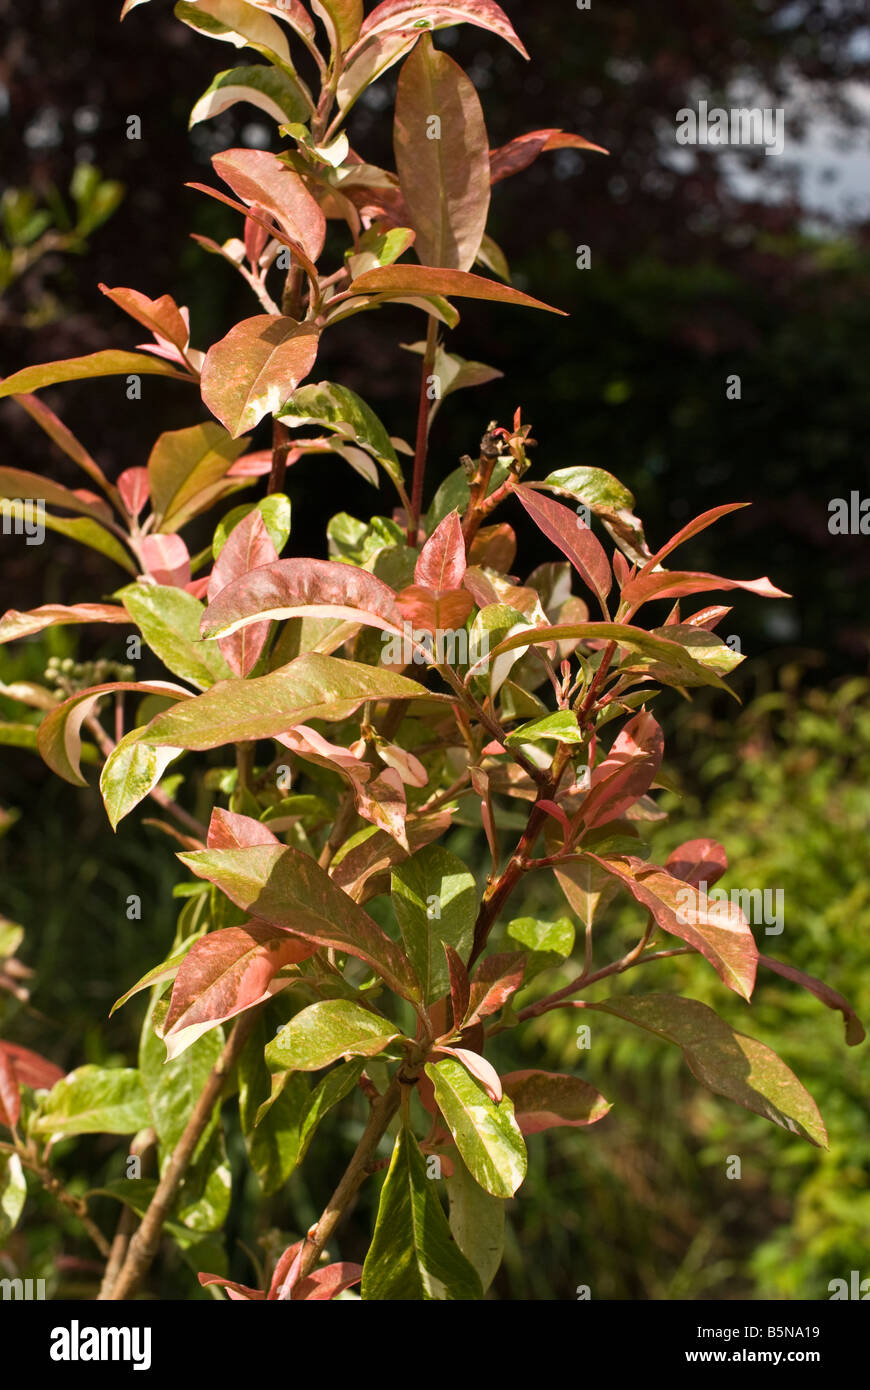 Evergreen shrub Photinia davidiana Palette in May Stock Photo - Alamy